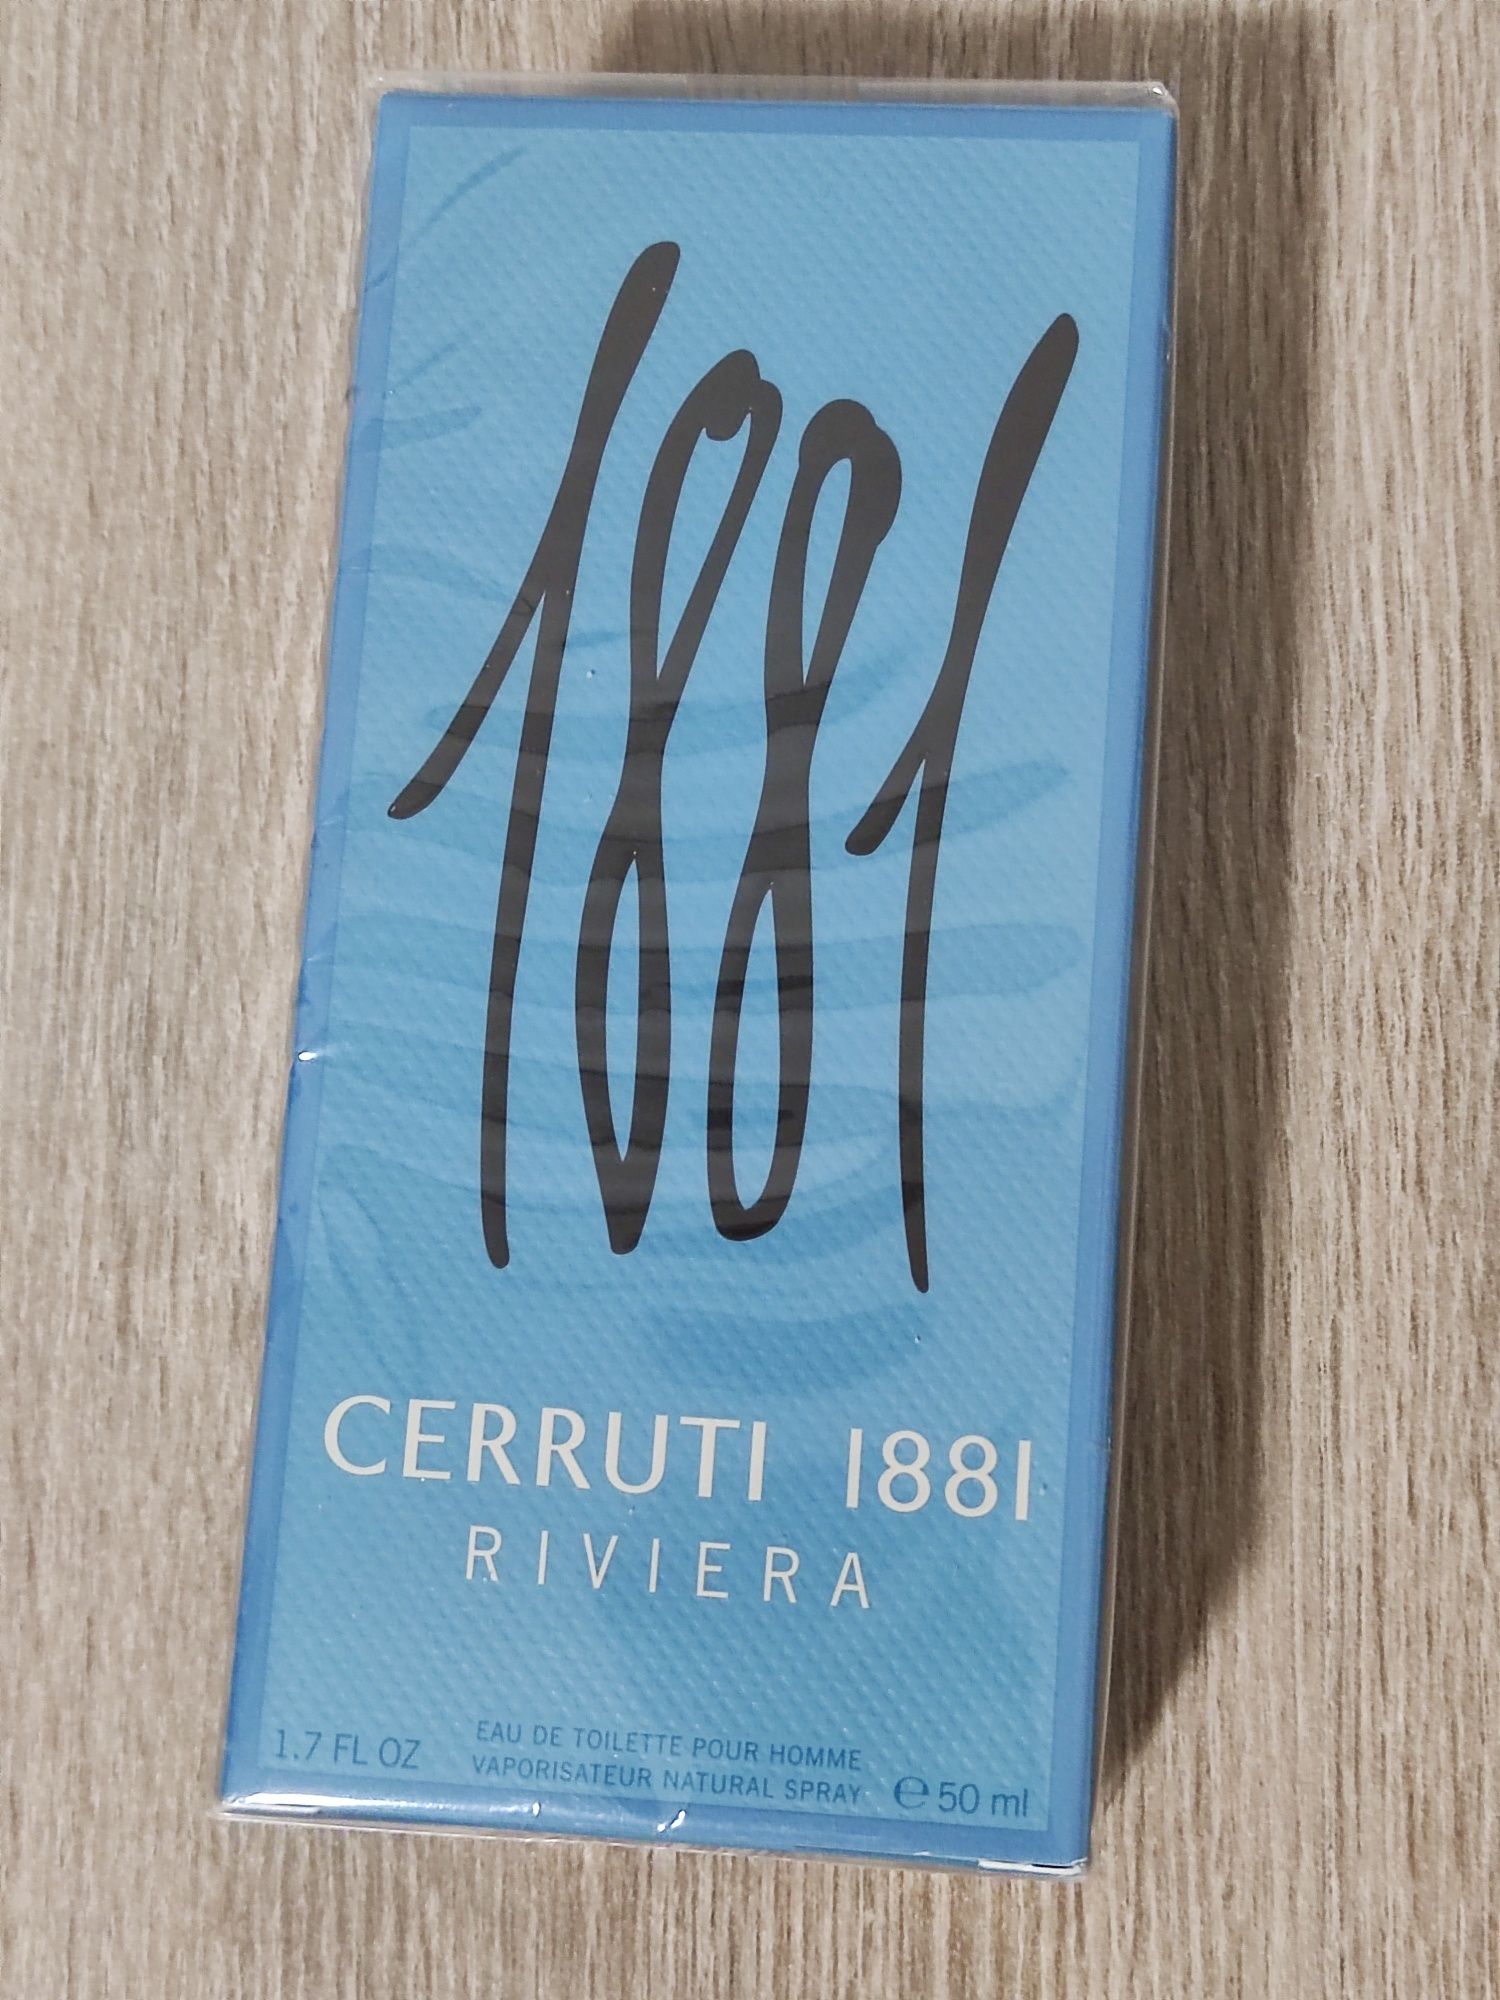 Cerruti 1881 Riviera 50ml